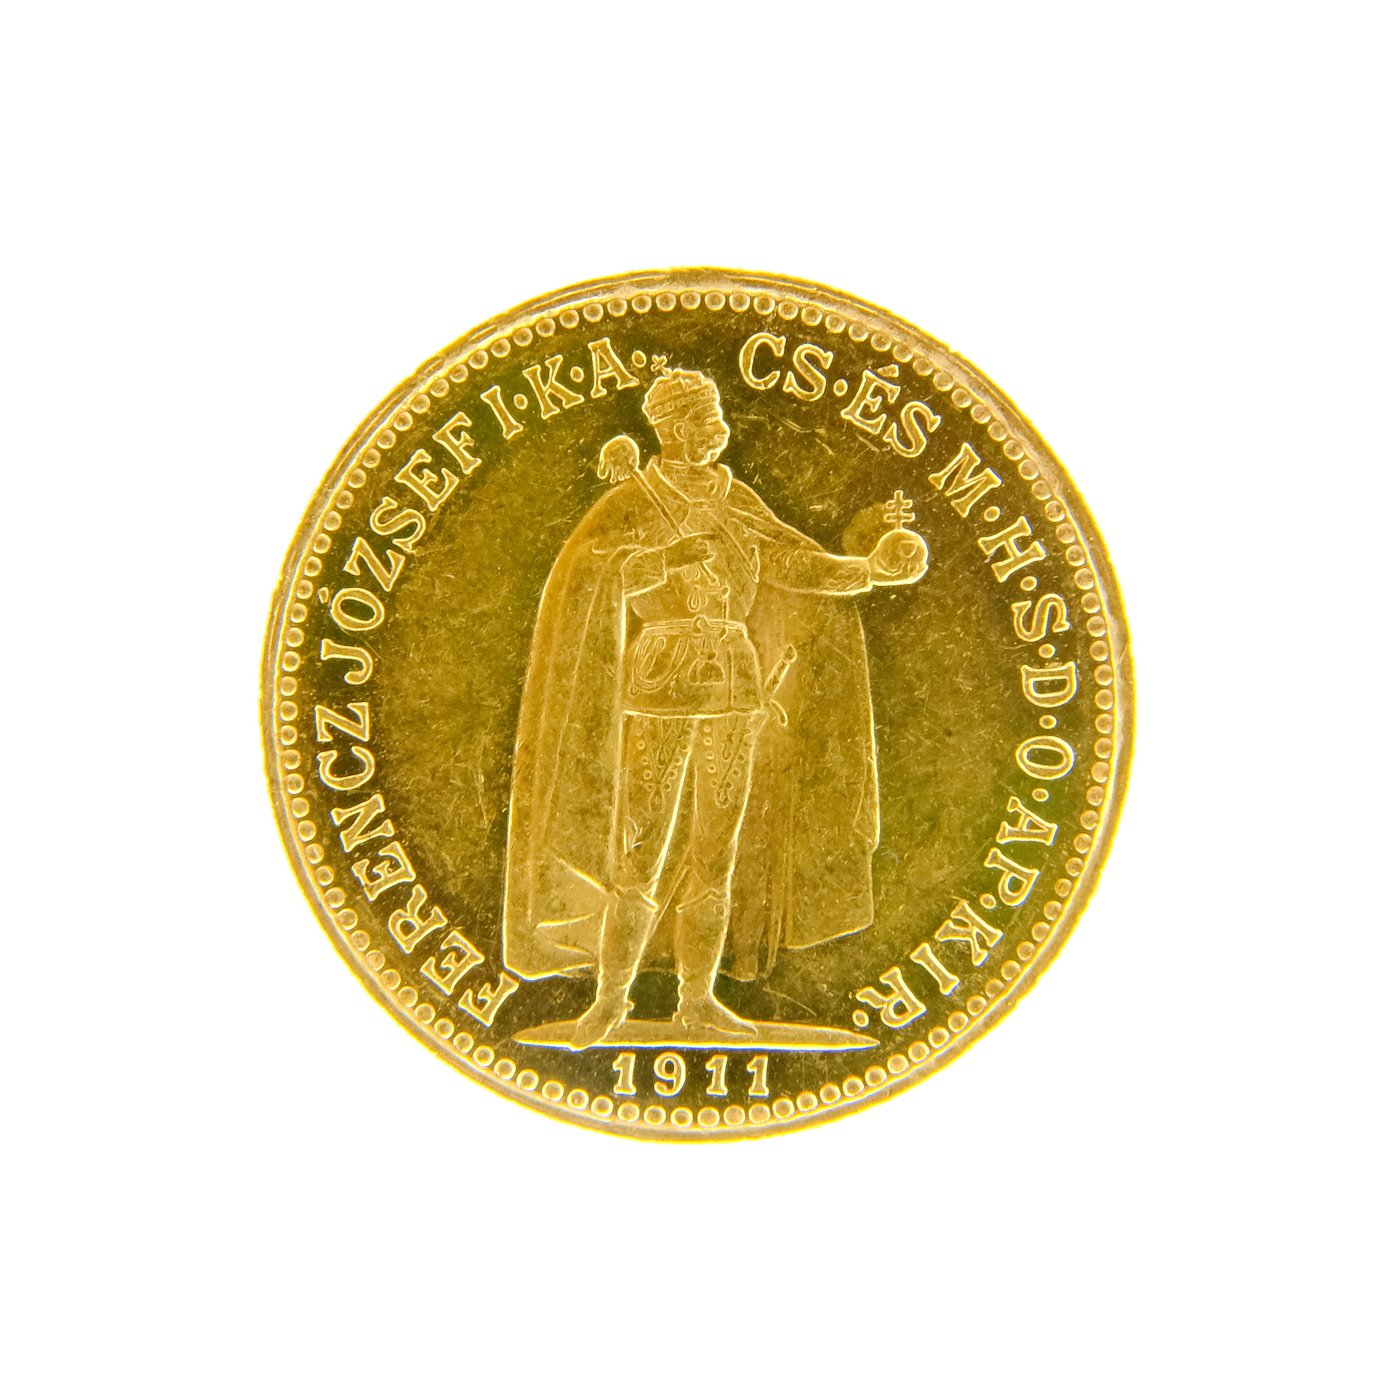 .. - Rakousko Uhersko zlatá 10 Koruna 1911 K.B. uherská,  zlato 900/1000, hrubá hmotnost 3,387g